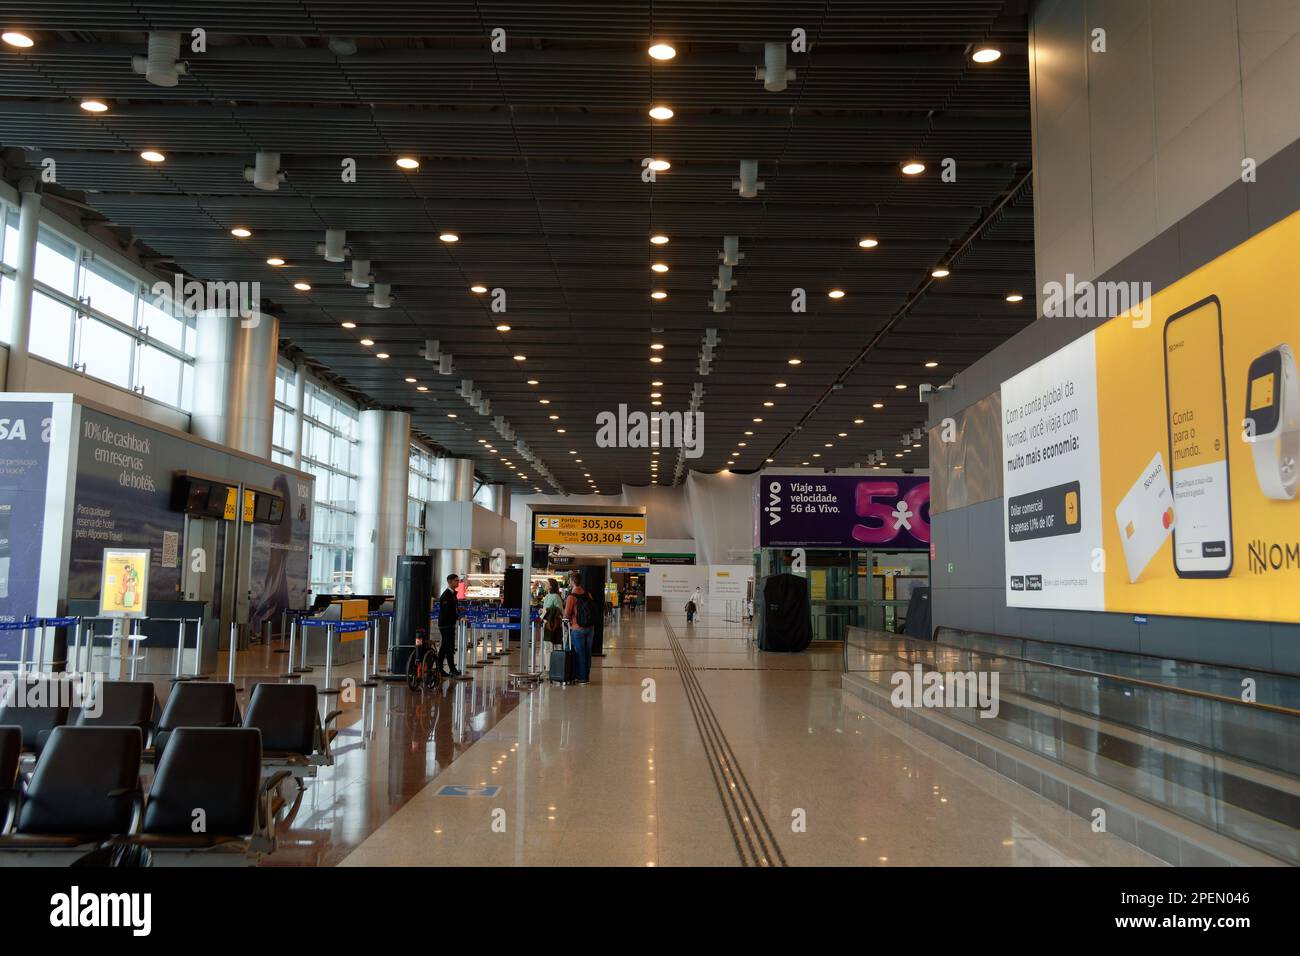 Internationaler Flughafen Sao Paulo/Guarulhos - Abflugterminal. Gouverneur Andre Franco Montoro International Airport auch bekannt als Cumbica Airport. Stockfoto